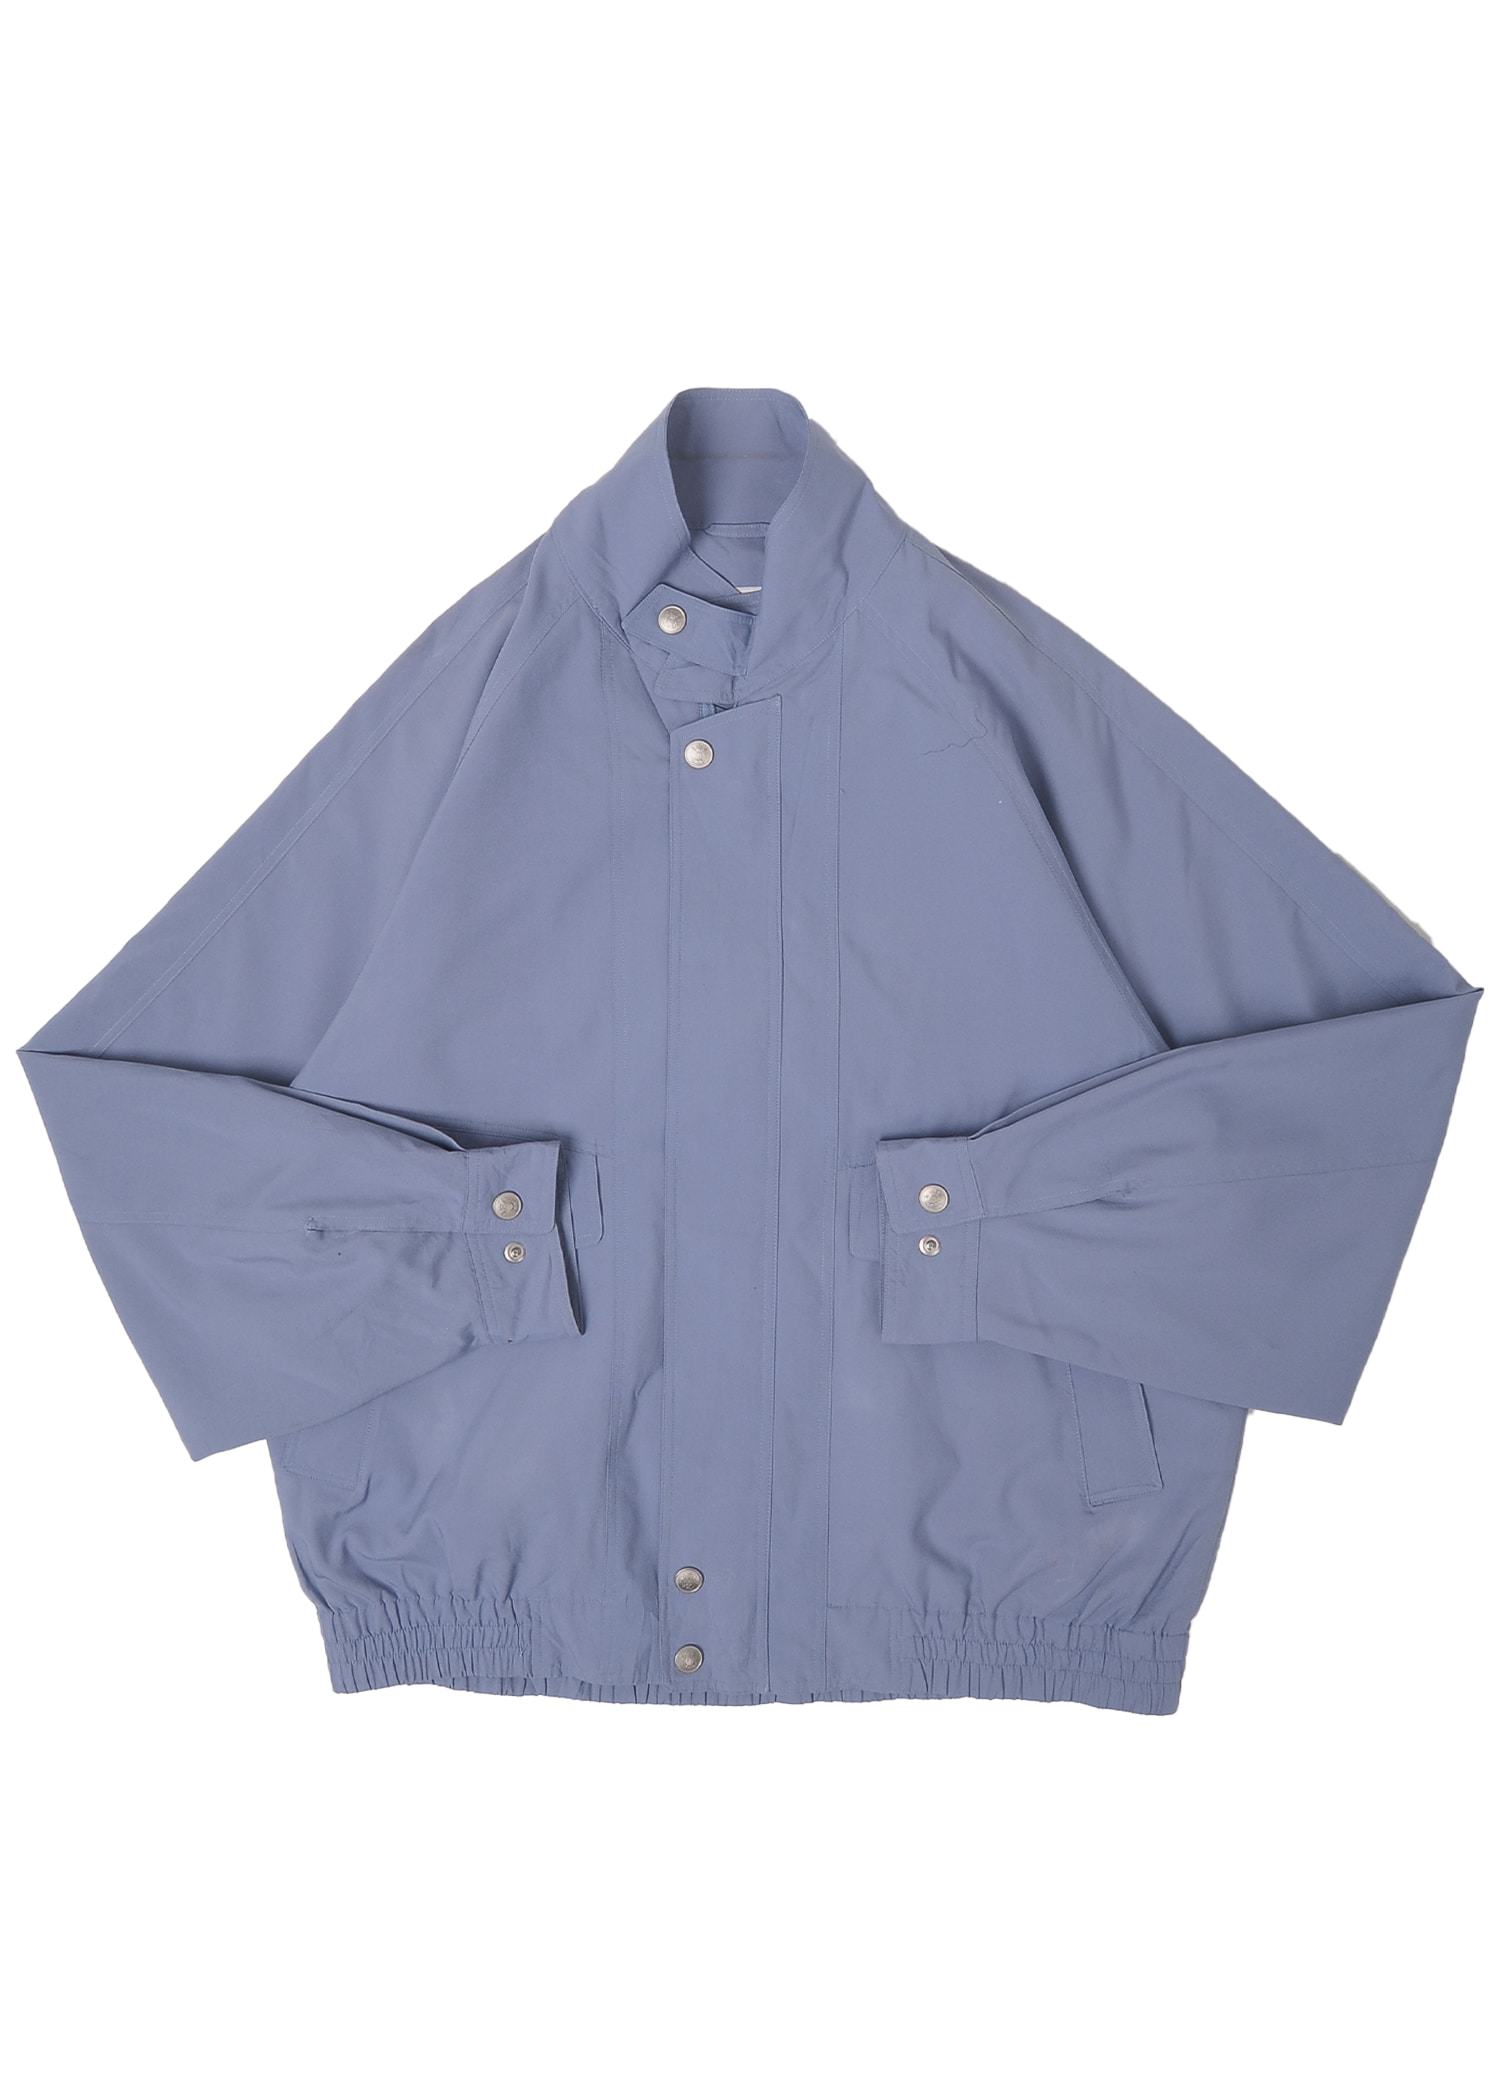 selcet vintage : blouson jacket